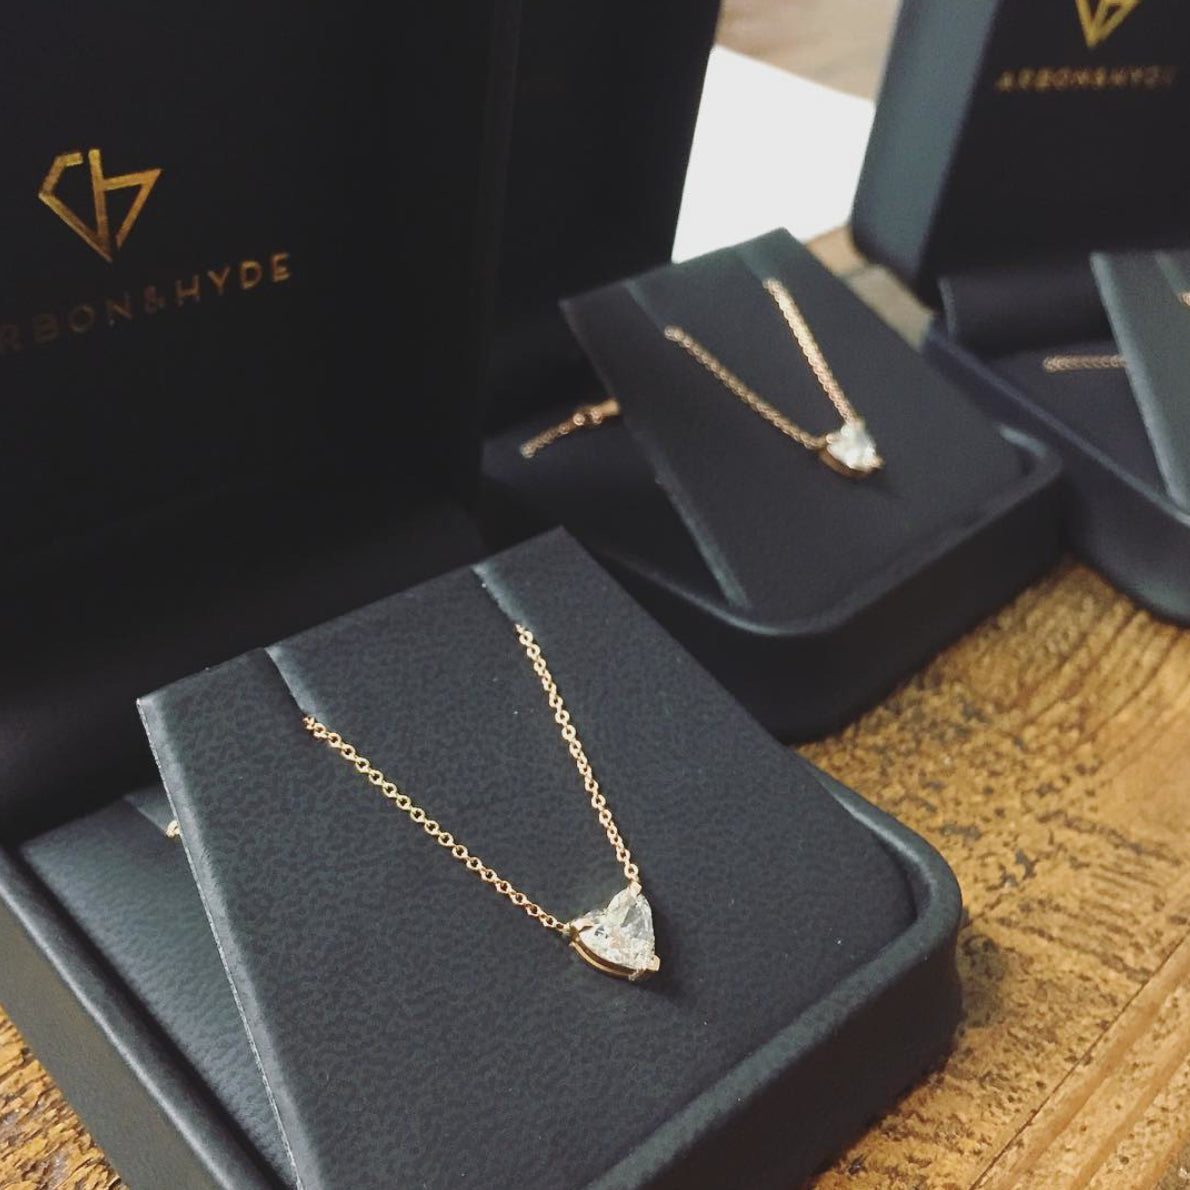 Heart Shape Diamonds shown in gift packaging